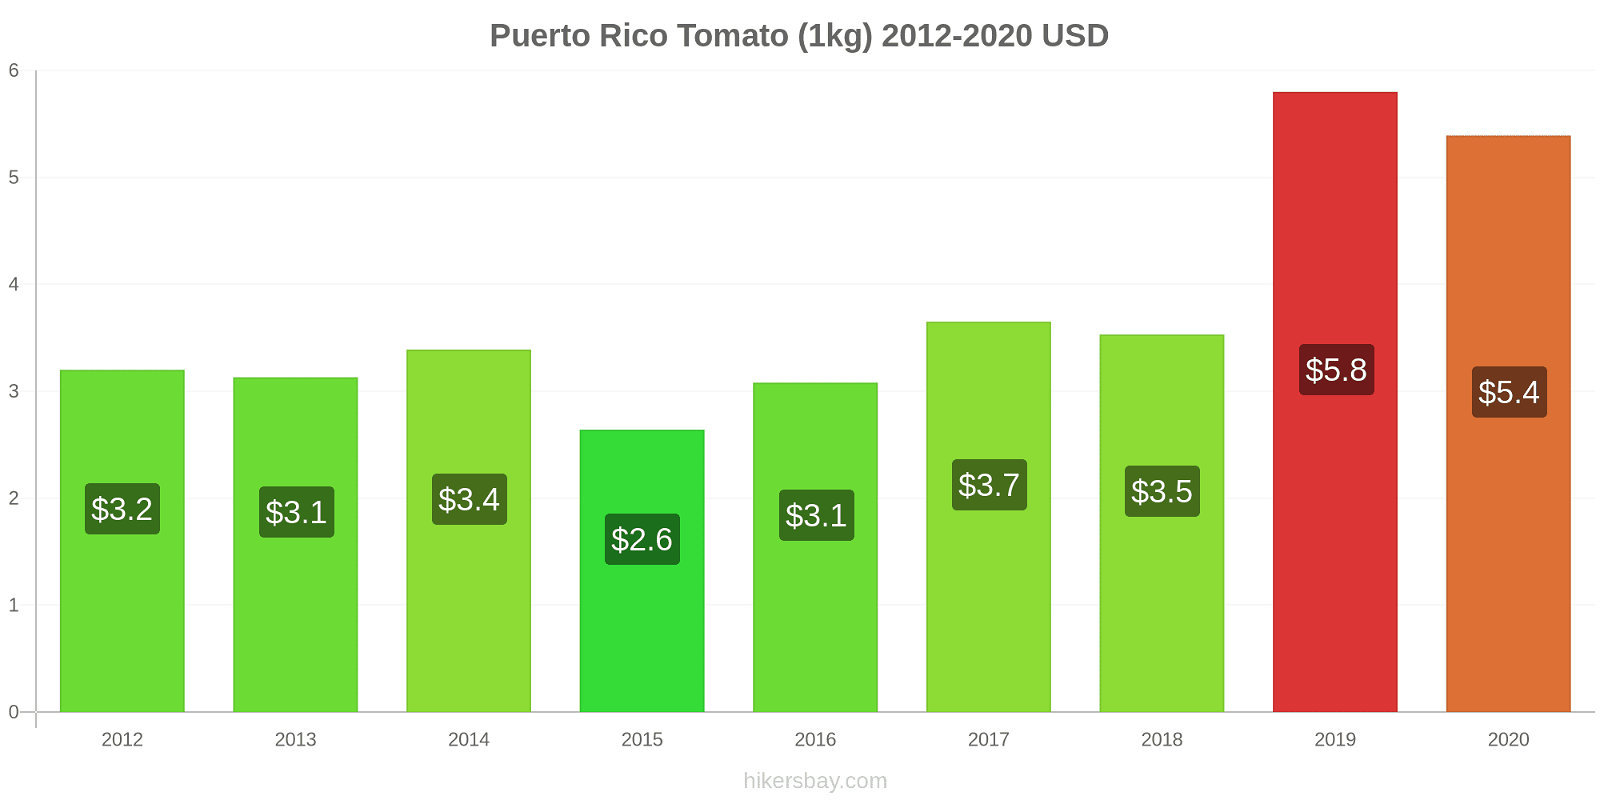 Puerto Rico price changes Tomato (1kg) hikersbay.com